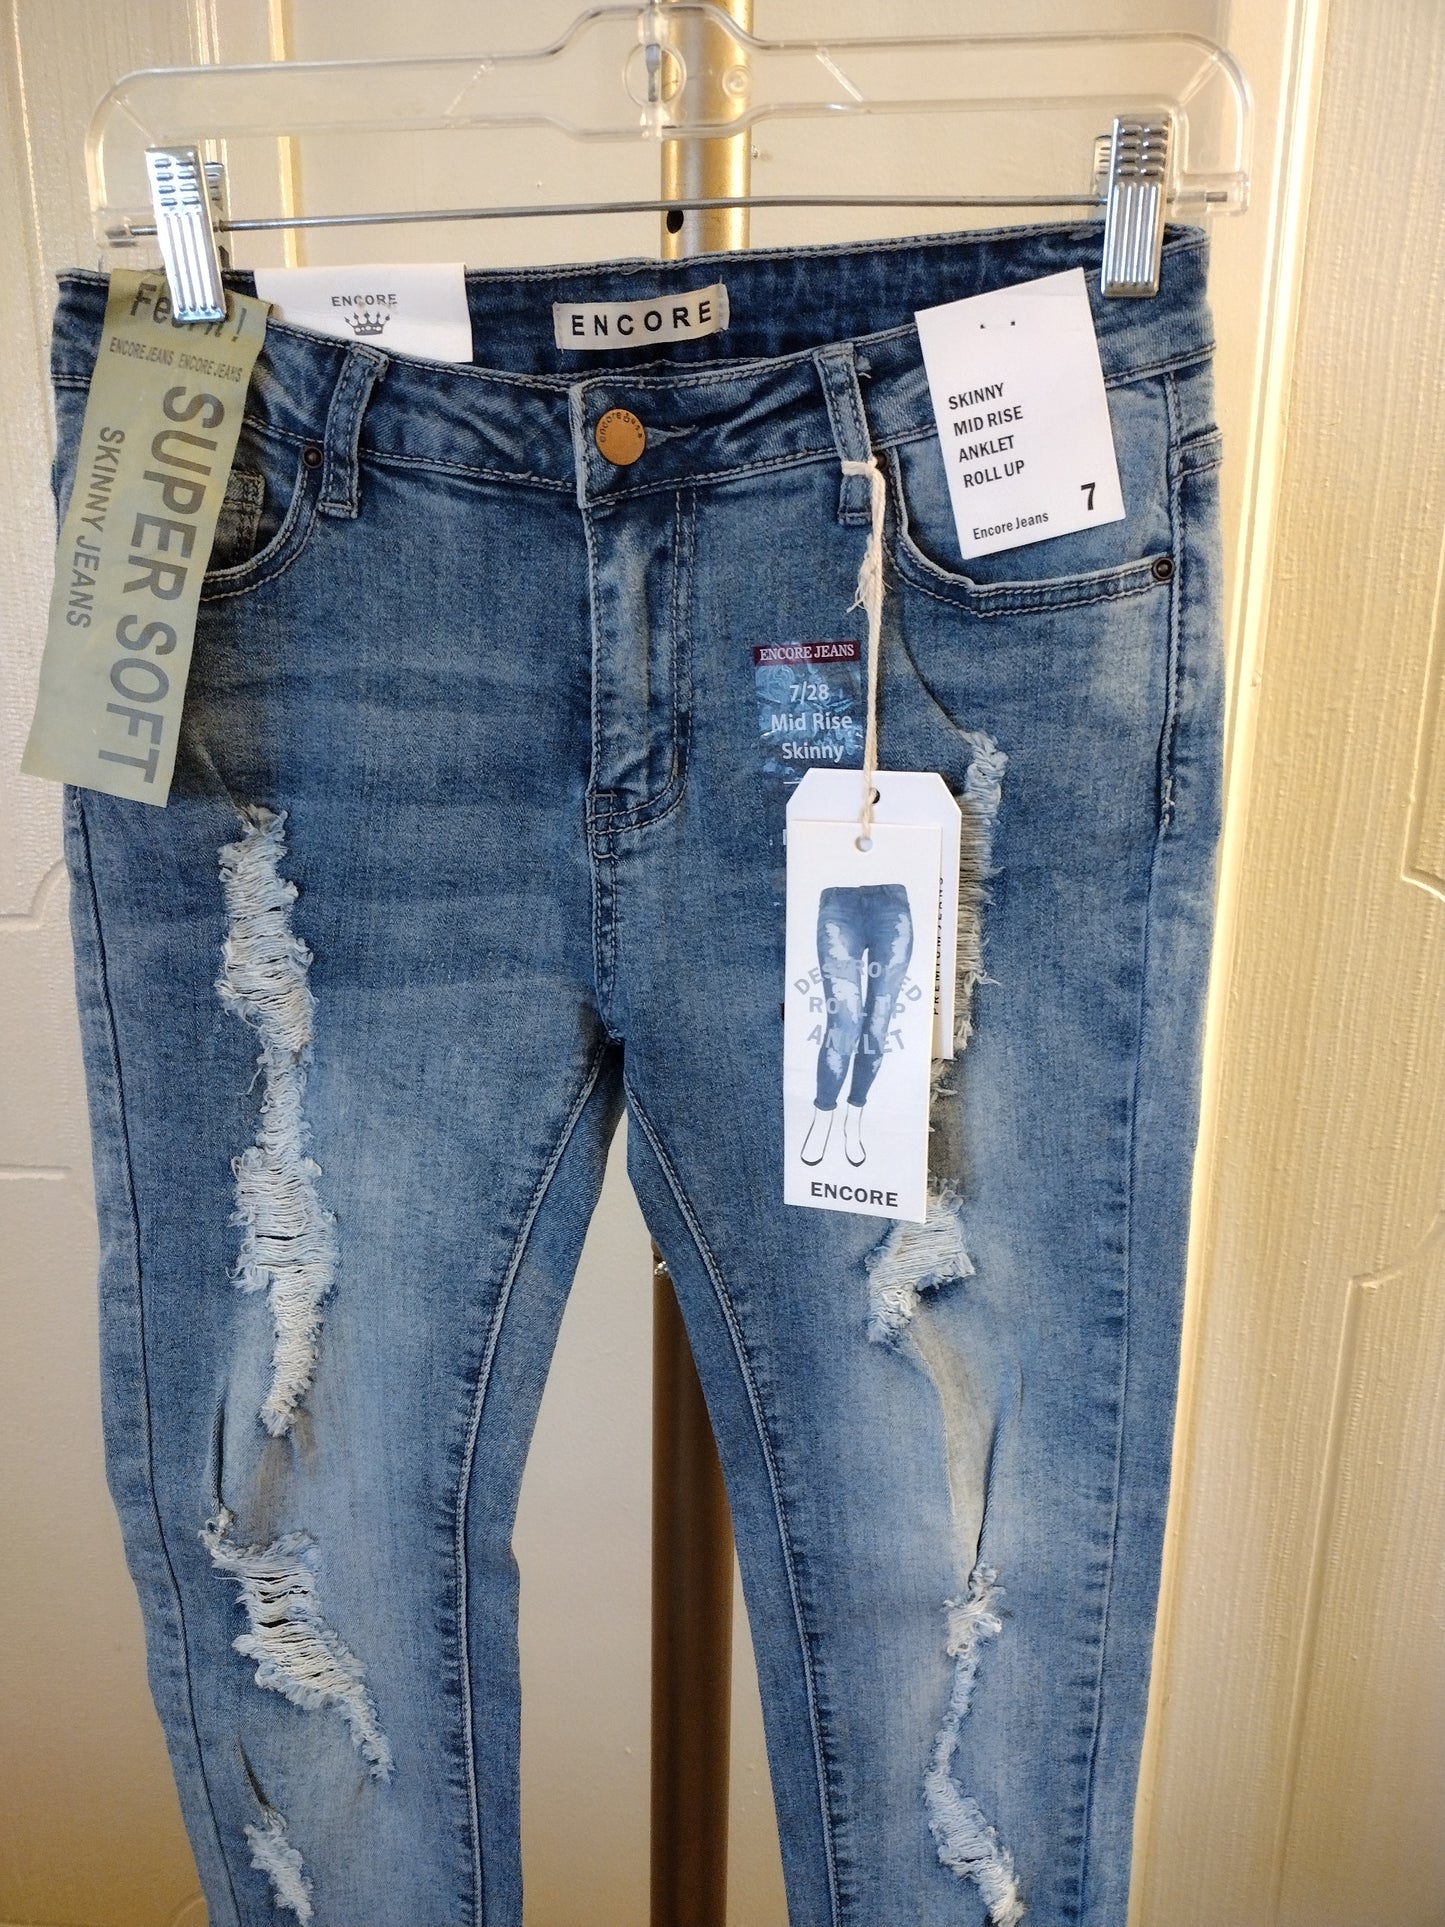 Encore Slim Fit Skinny Jeans Super Soft Mid Rise Anklet Roll Up - Size 7